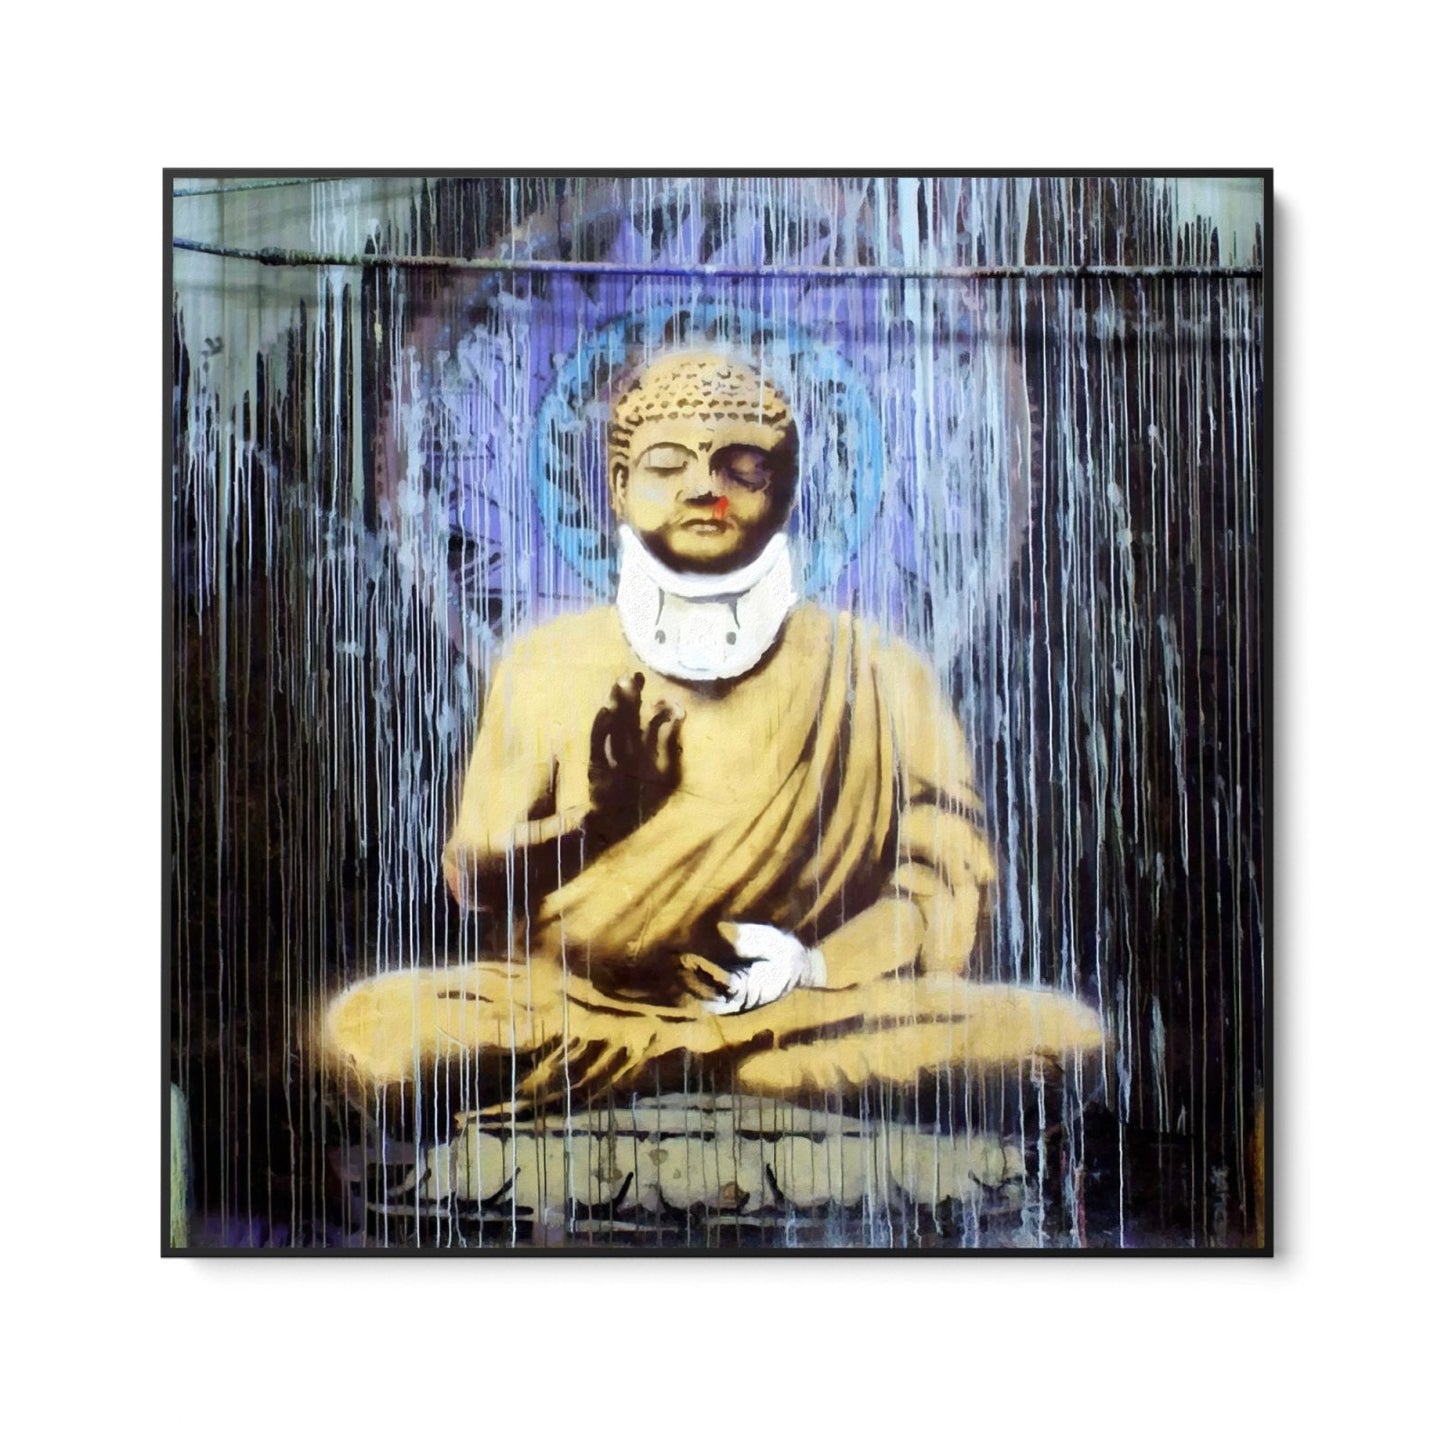 Verletzter Buddha, Banksy